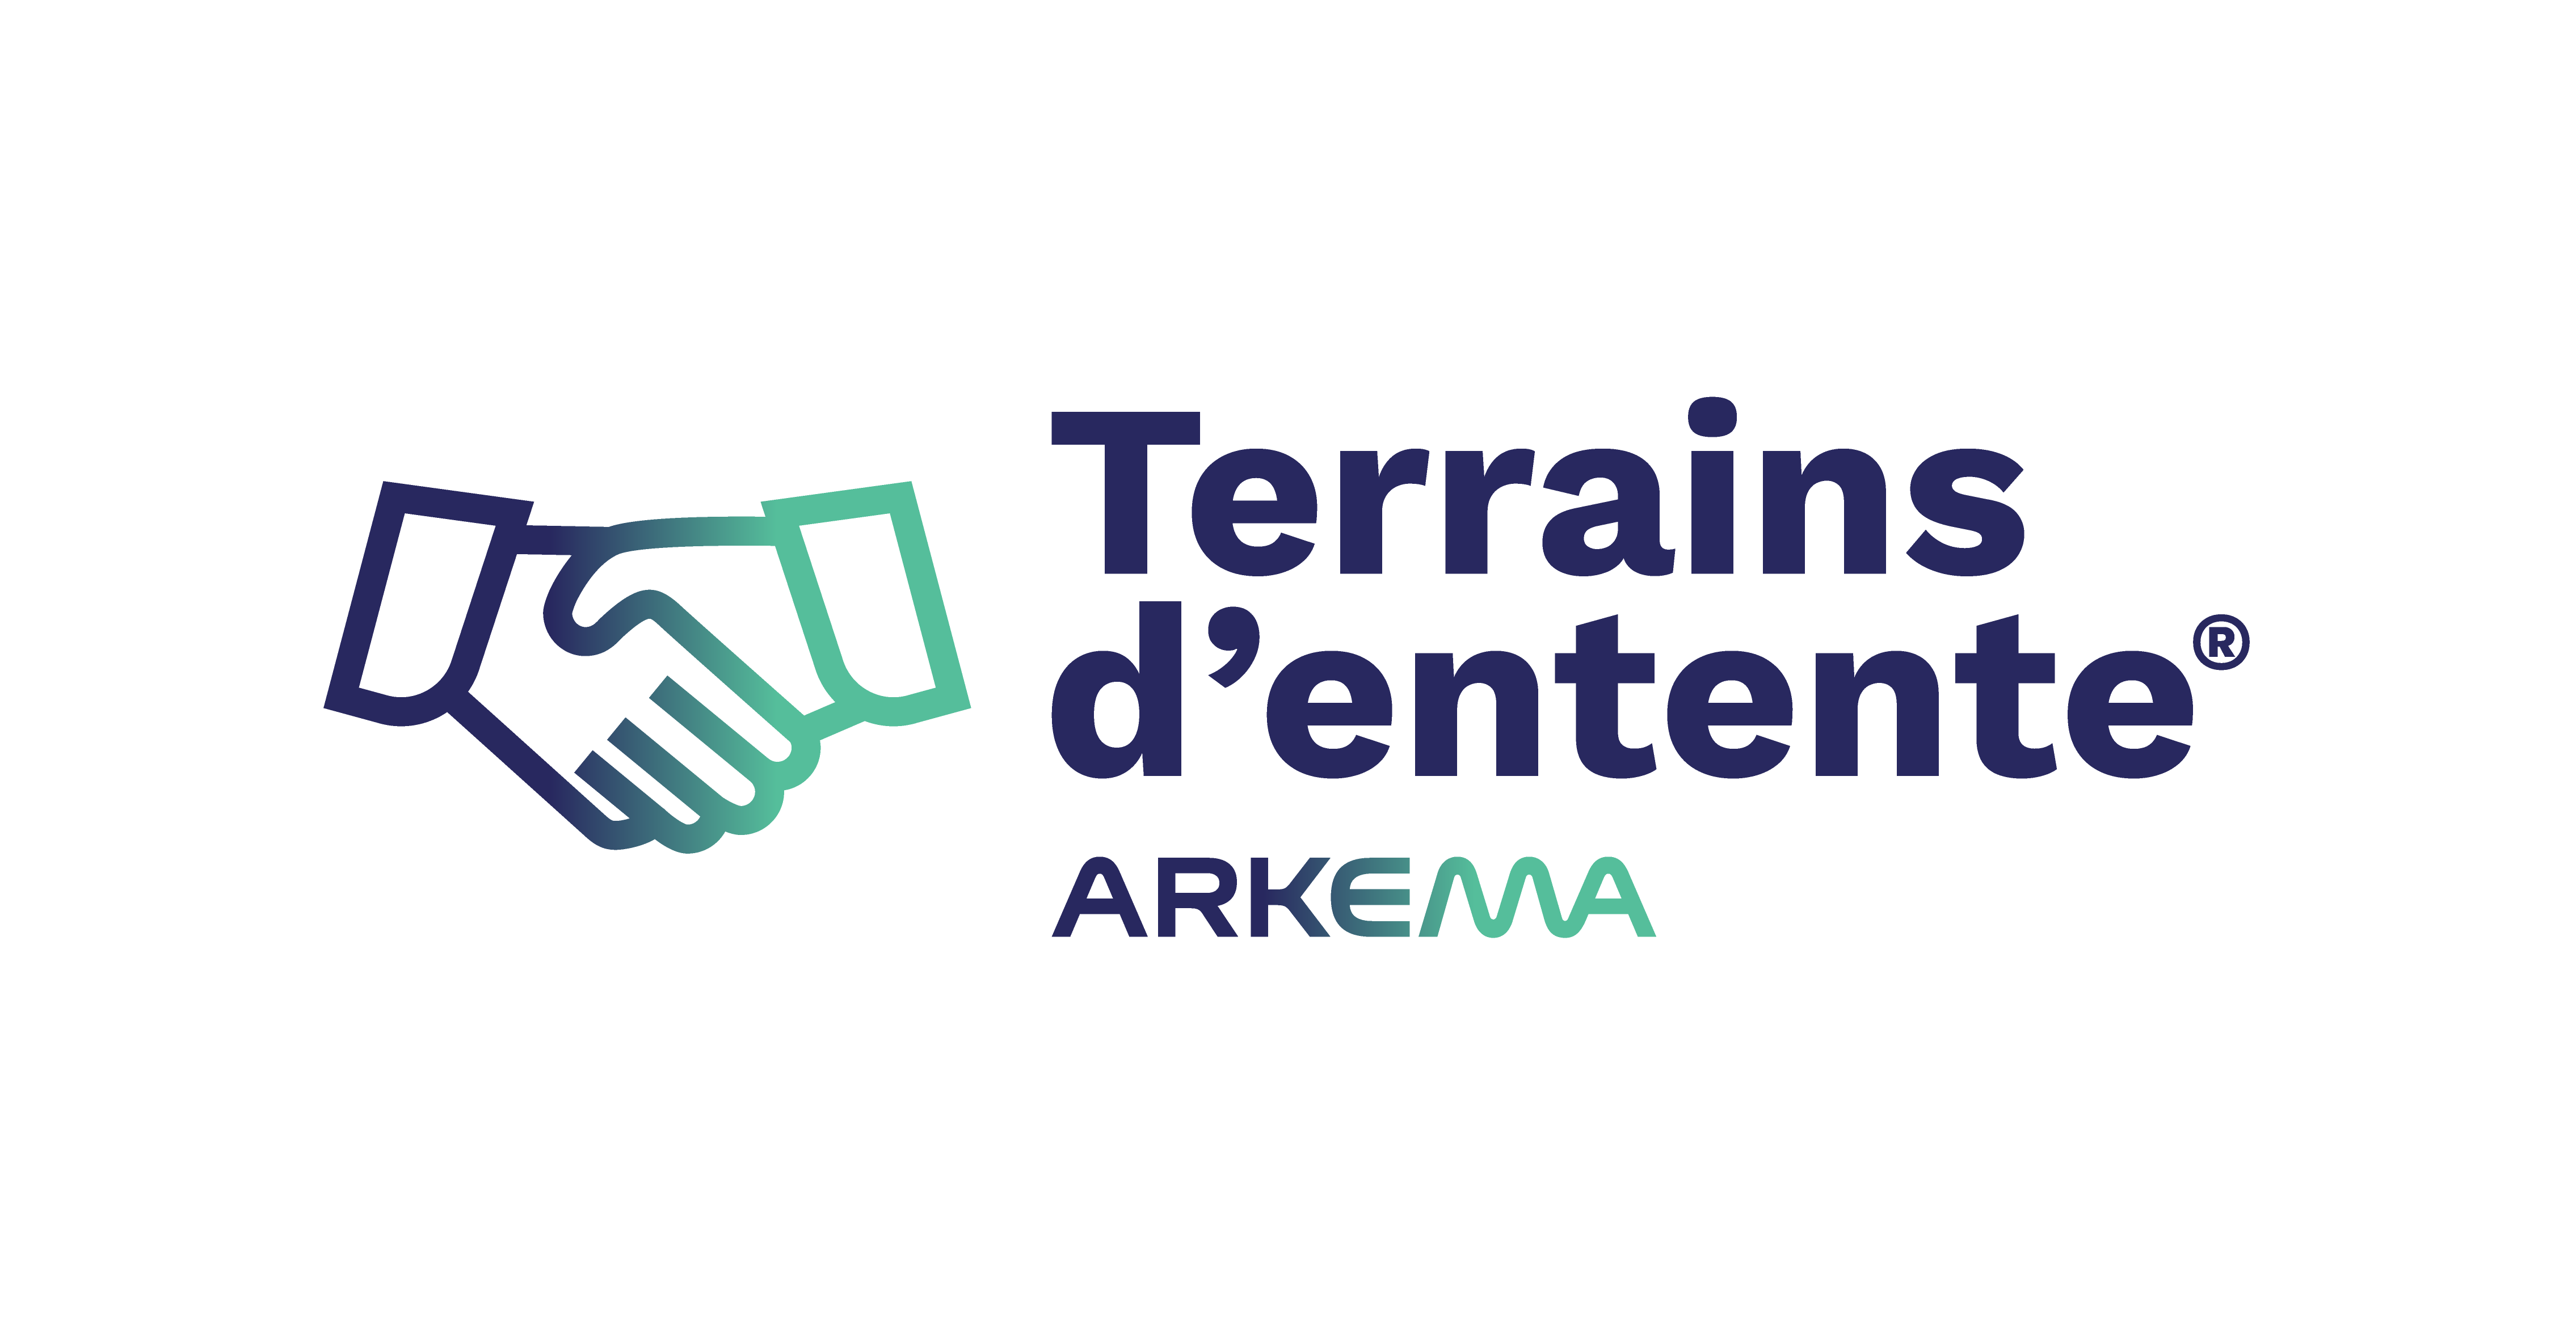 ark-terrains-dentente-exe.png_1644223205.png